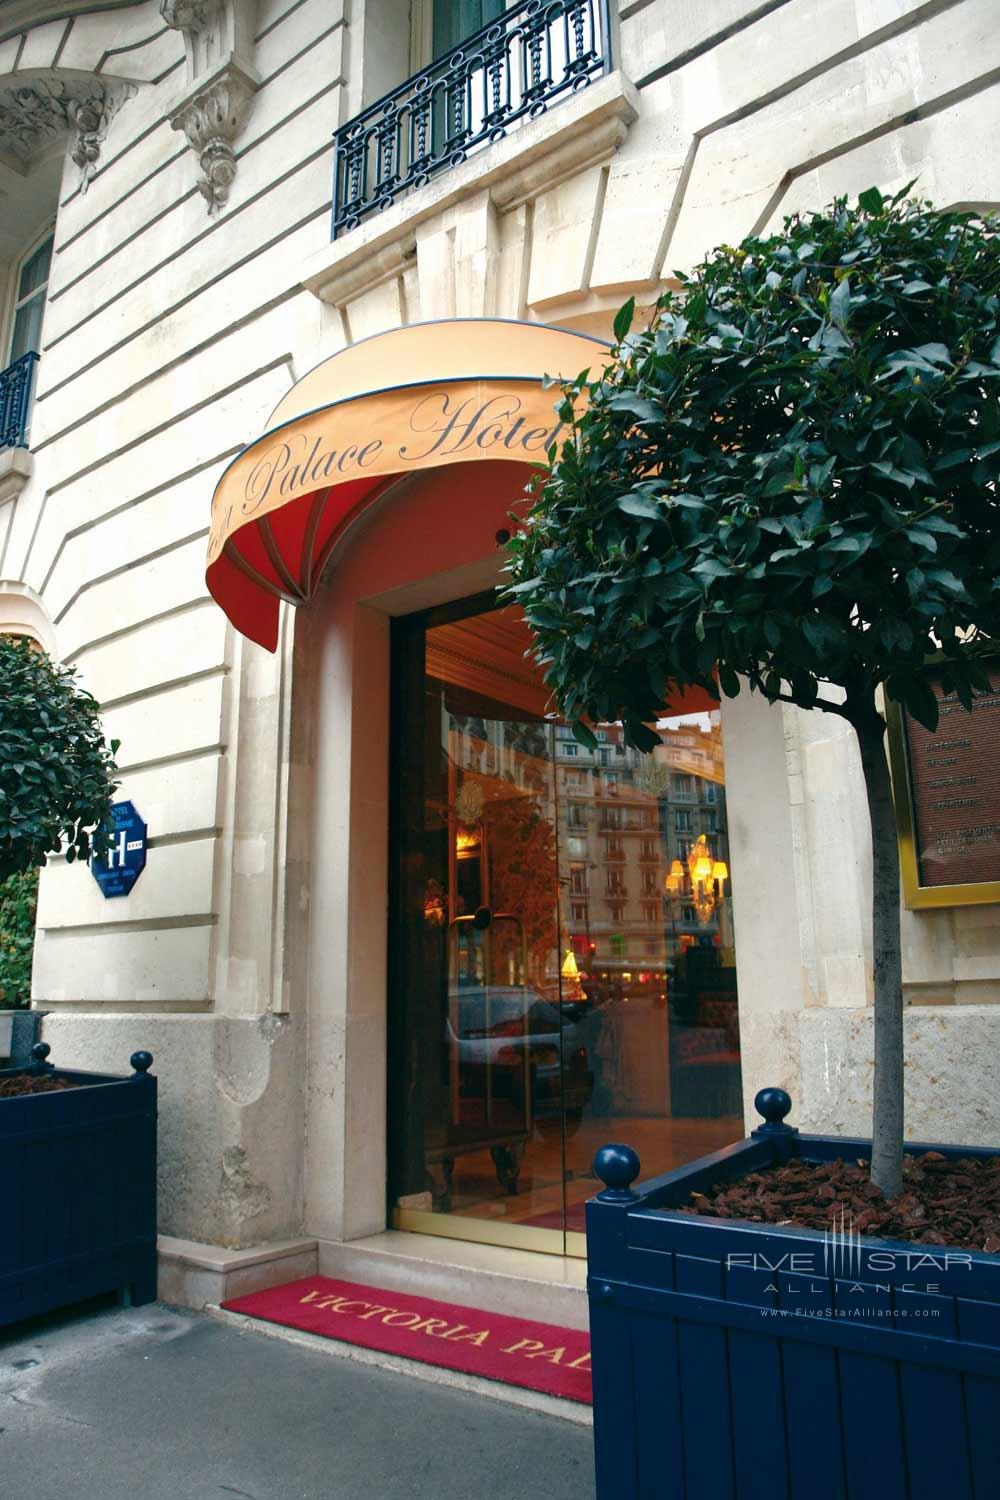 Entrance to Victoria Palace Hotel, Paris, France